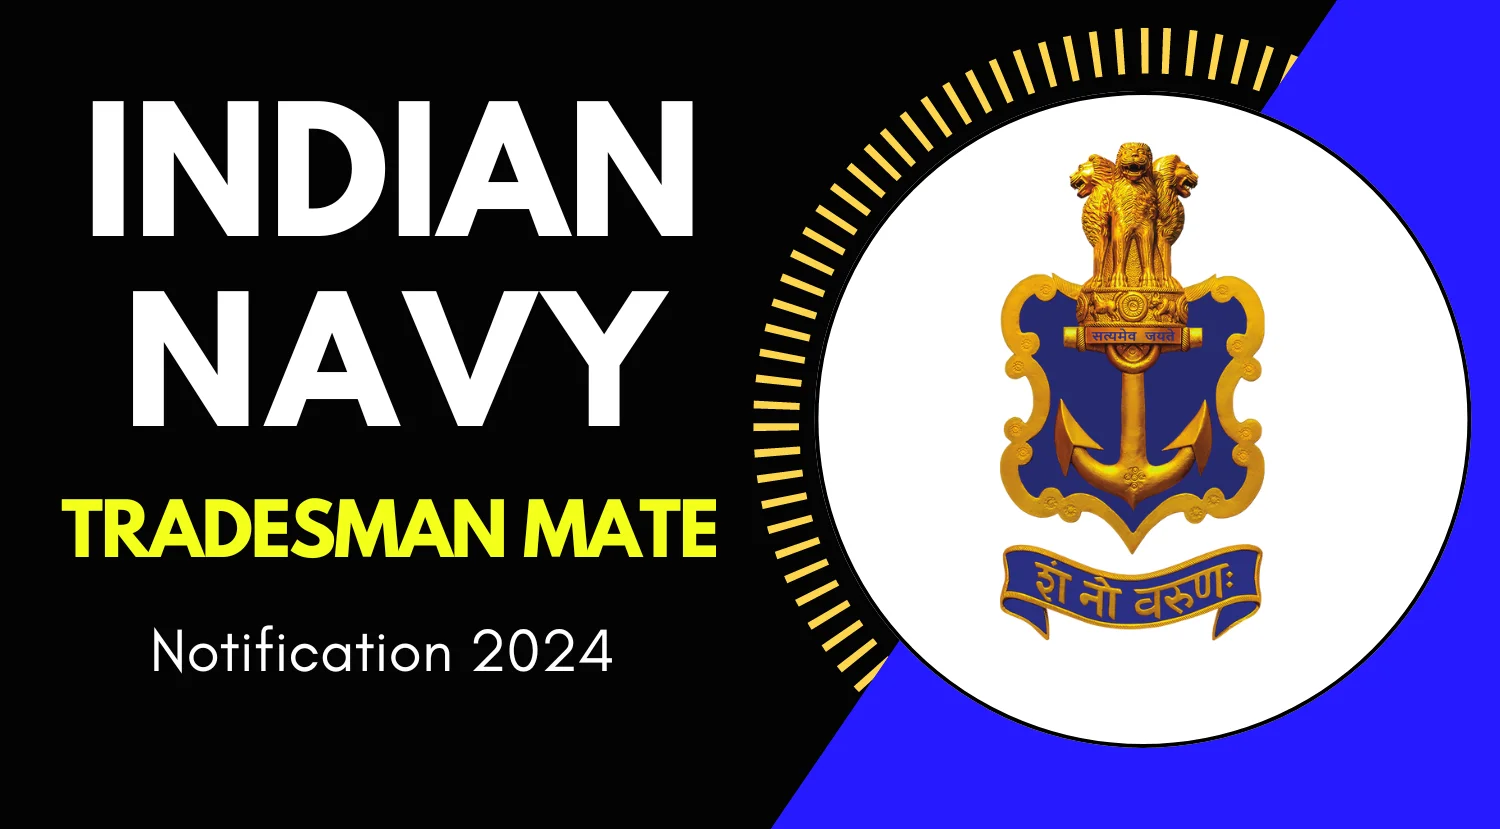 Indian Navy Tradesman Mate Recruitment 2024 Notification